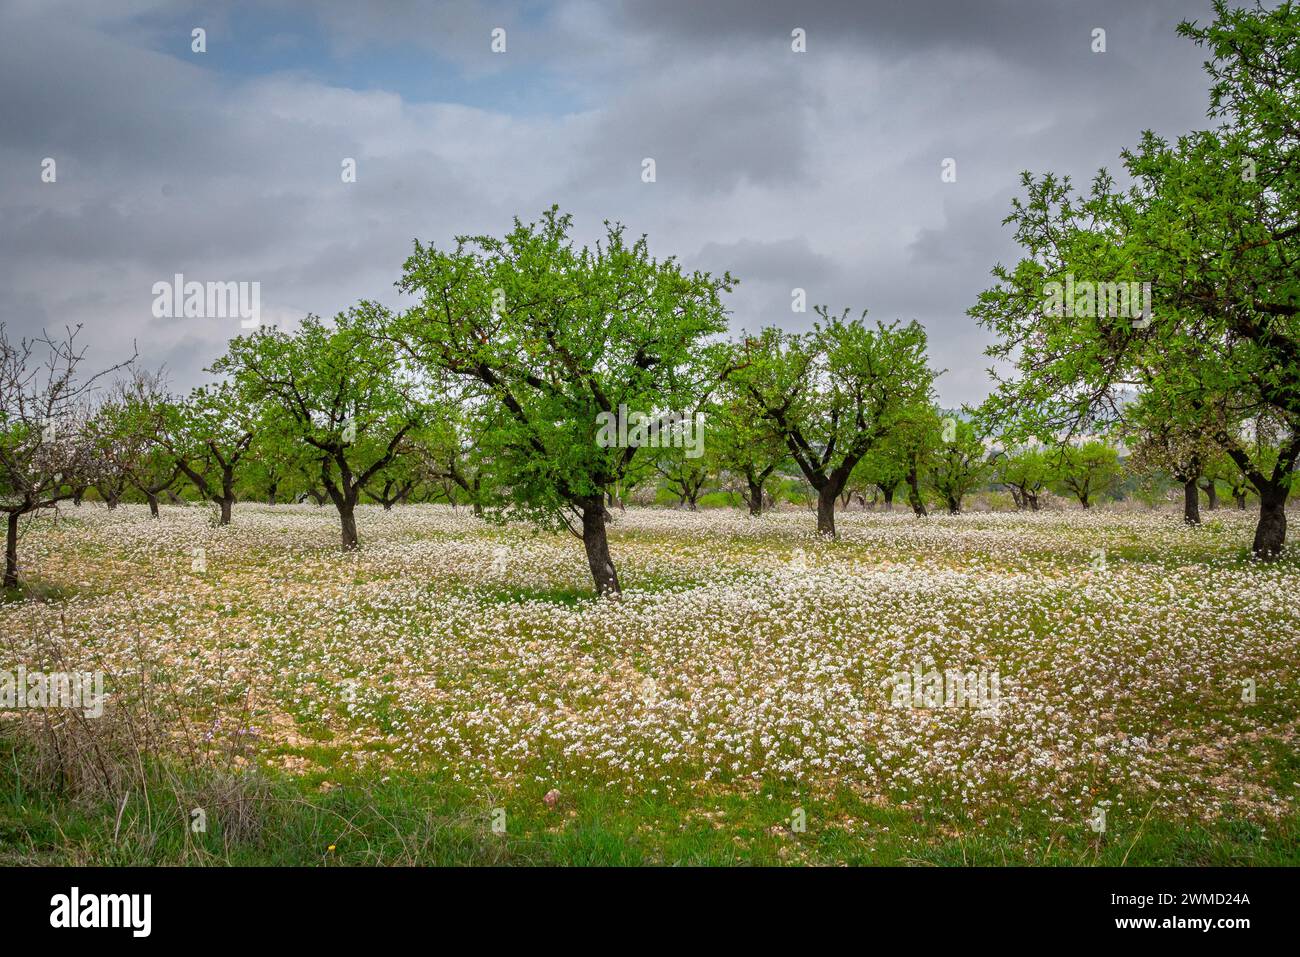 Almond trees in bloom in the Region of Murcia. Stock Photo